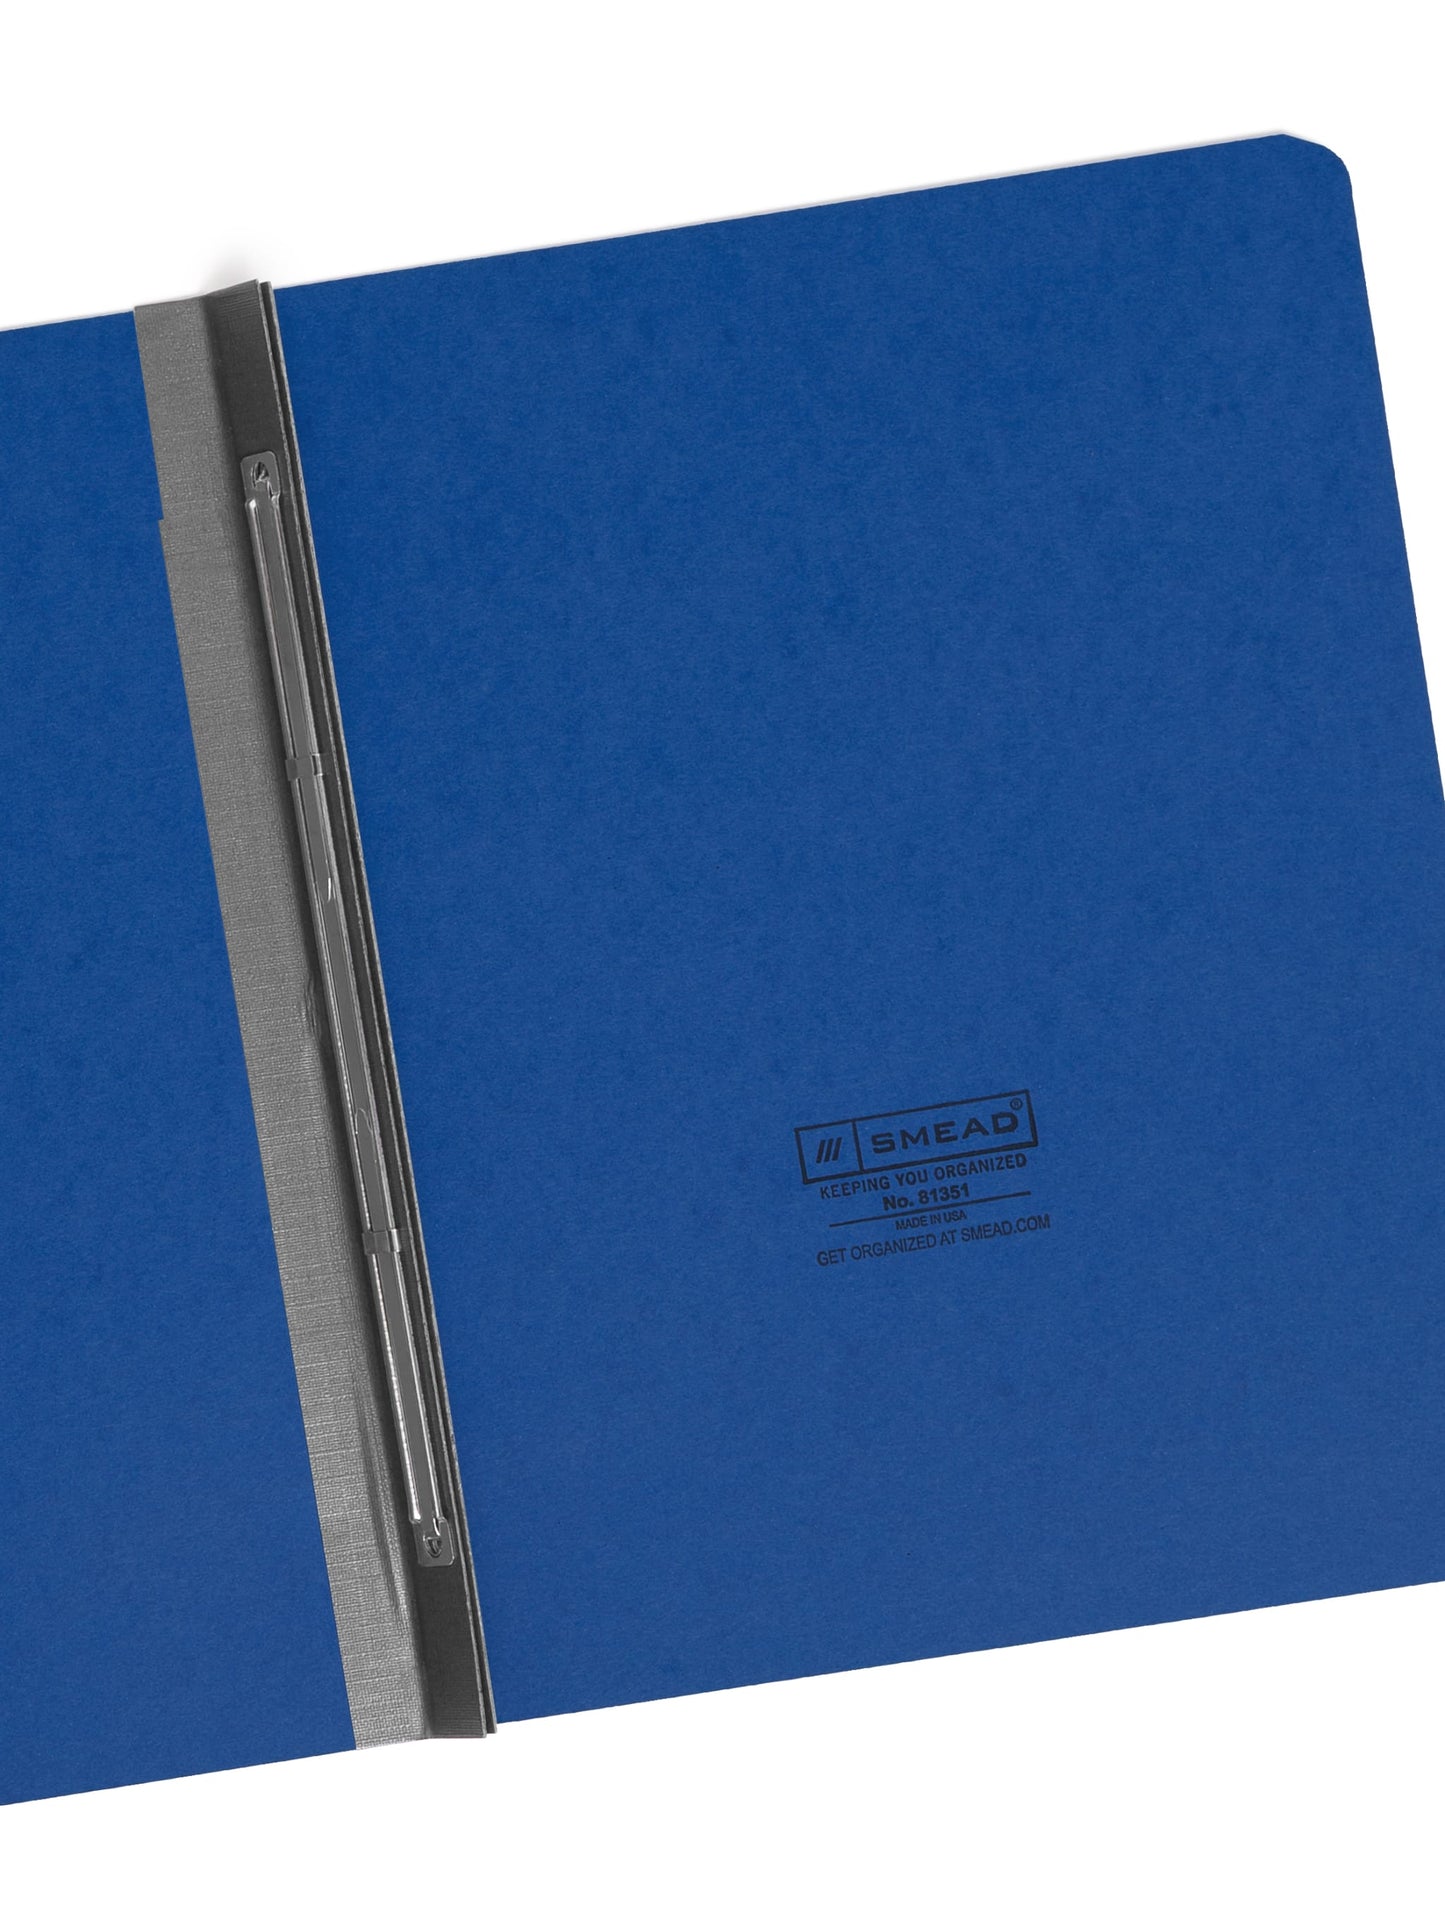 Premium Pressboard Report Covers, Metal Prong with Compressor, Side Fastener, 3 inch Expansion, 1 Fastener, Dark Blue Color, Letter Size, Set of 0, 30086486813519